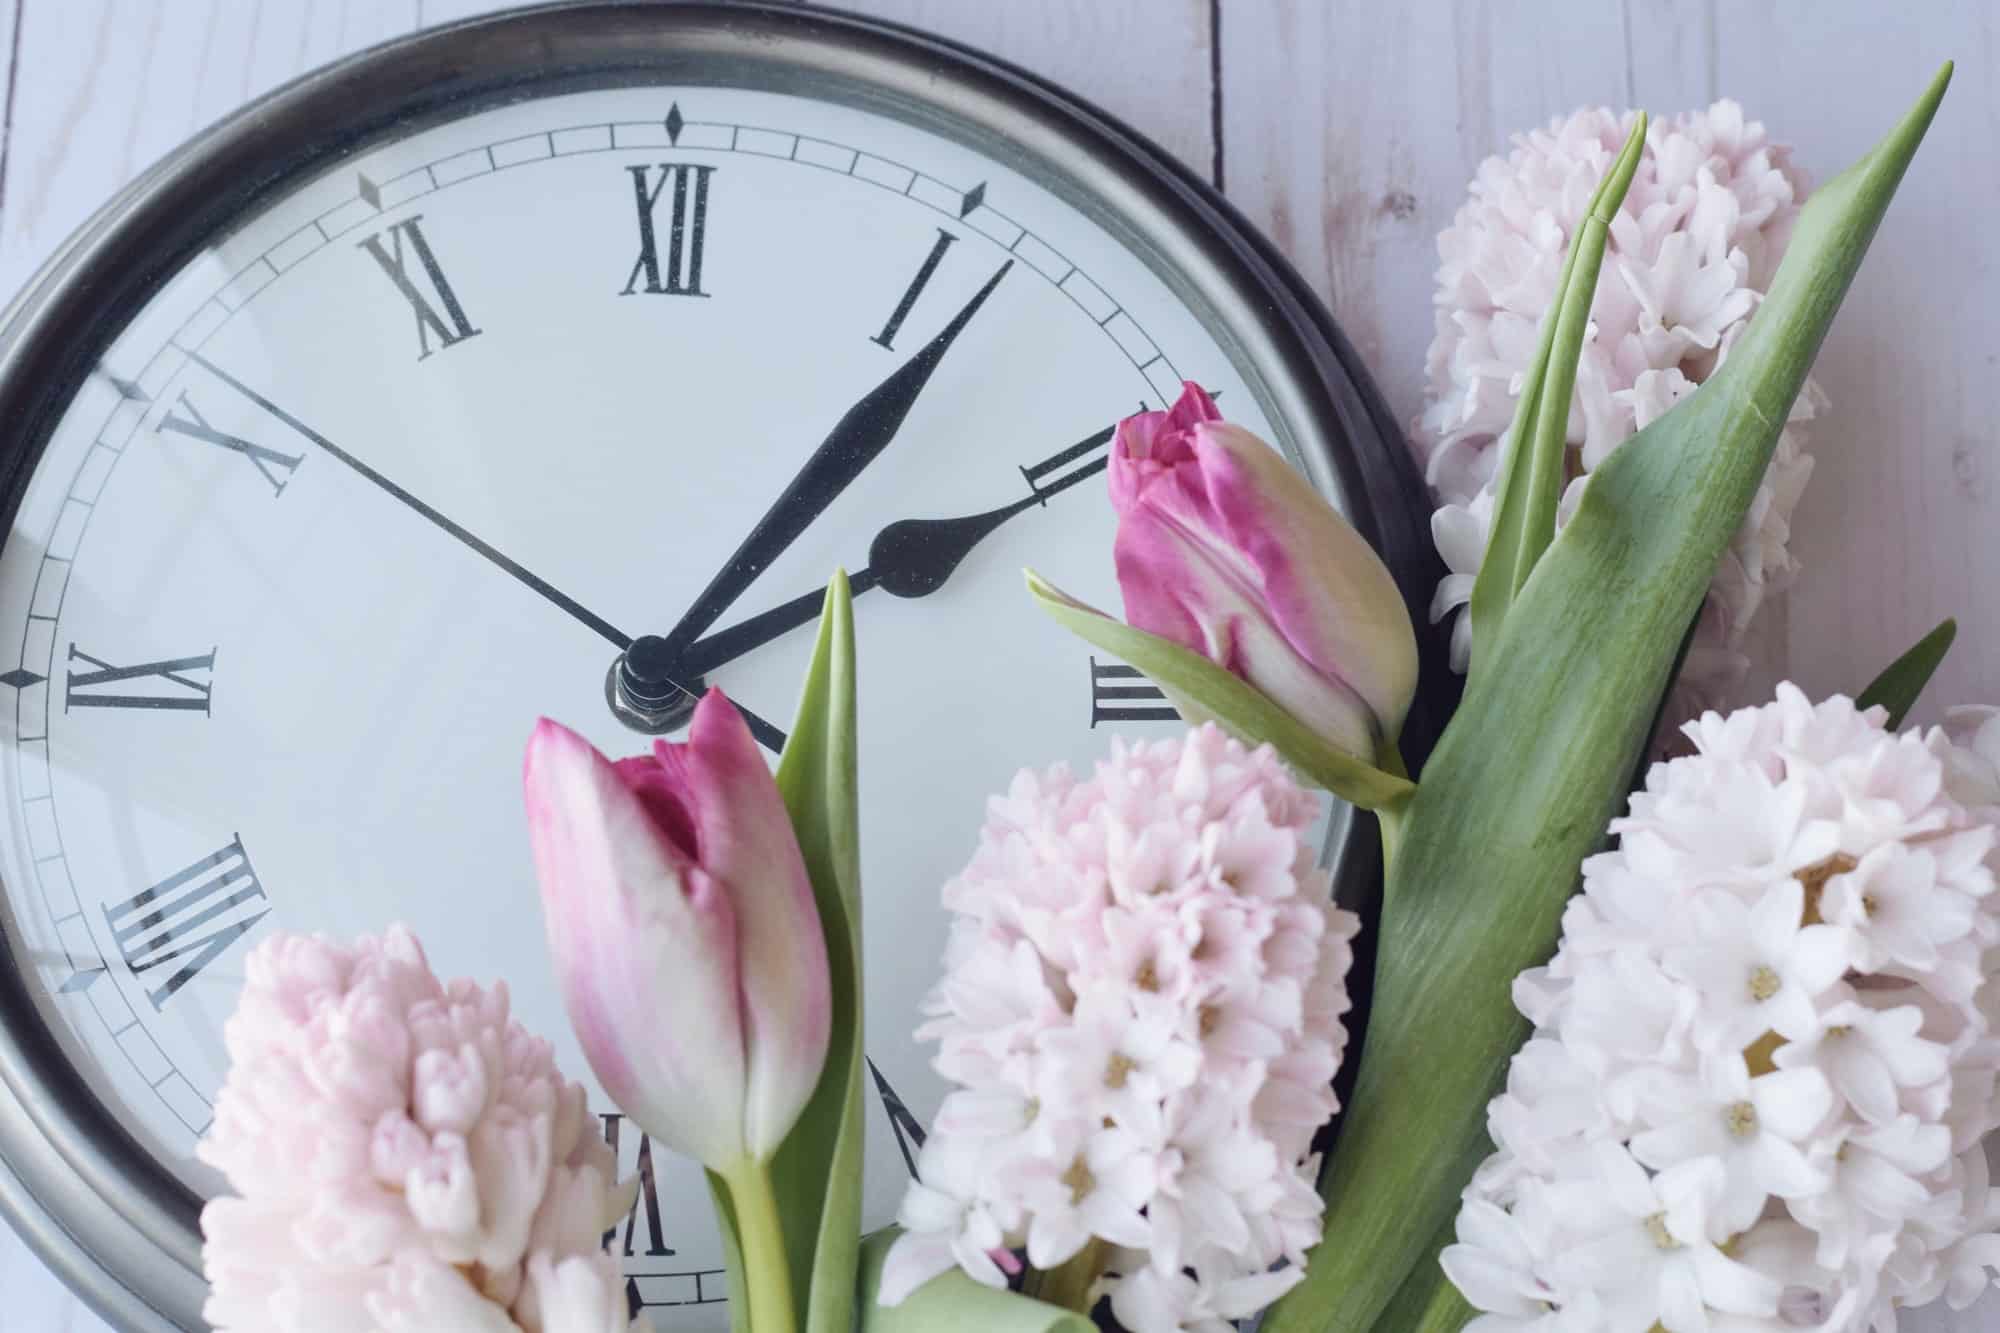 Spring forward clocks